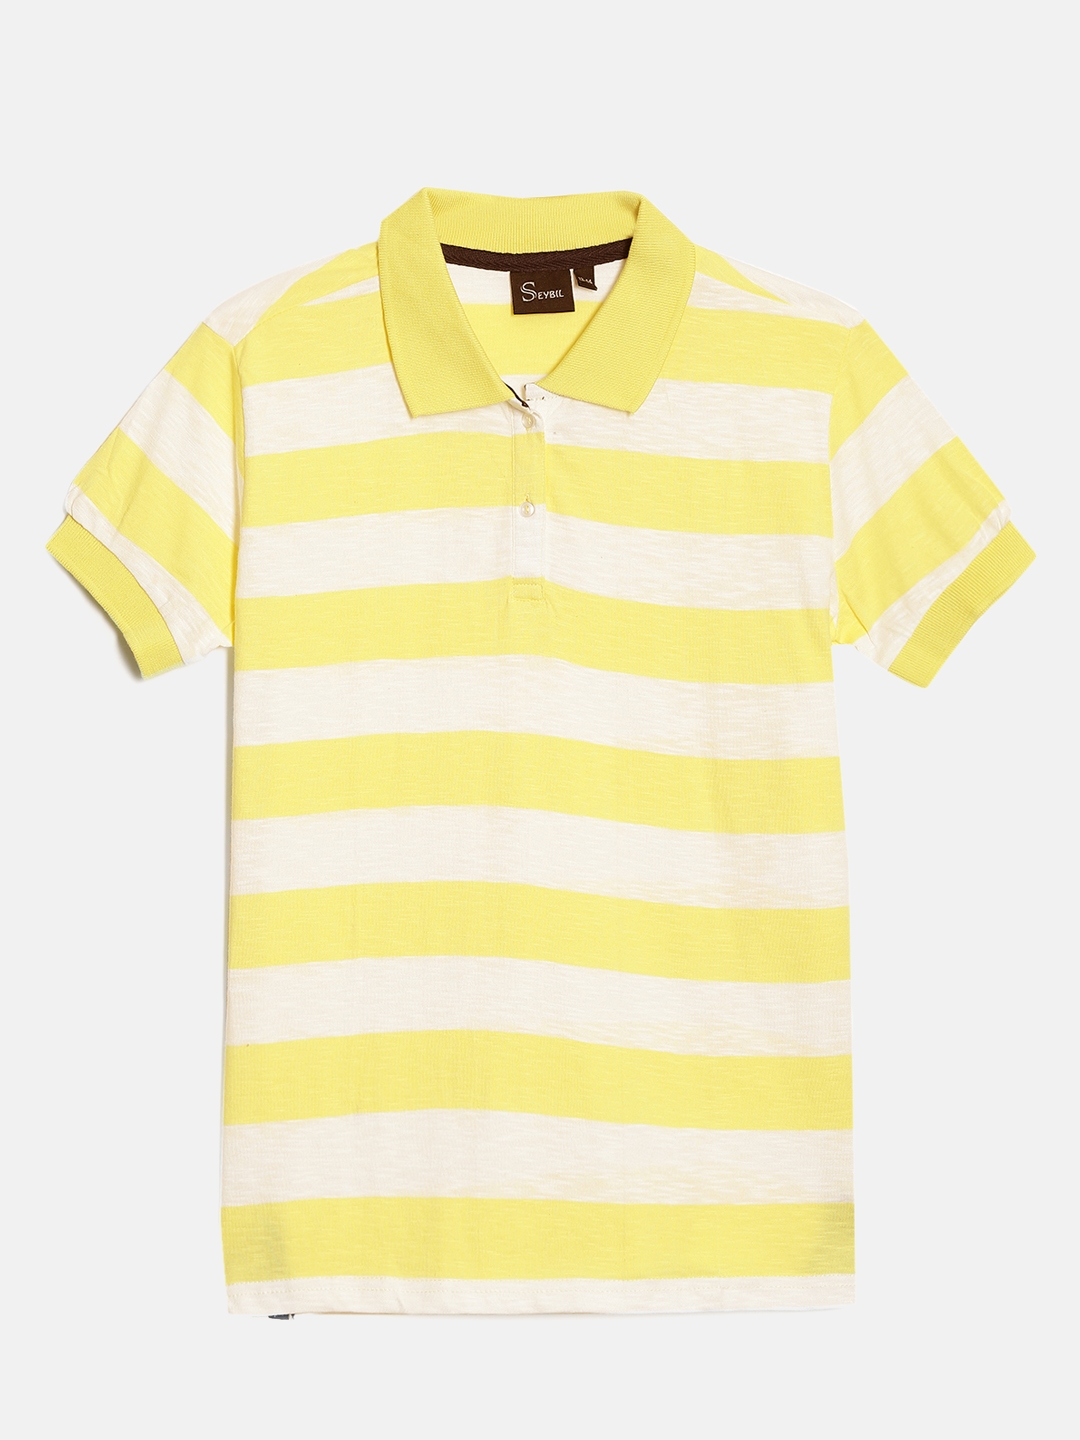 SEYBIL | Seybil Teen girls Yellow cotton striped polo Tshirt